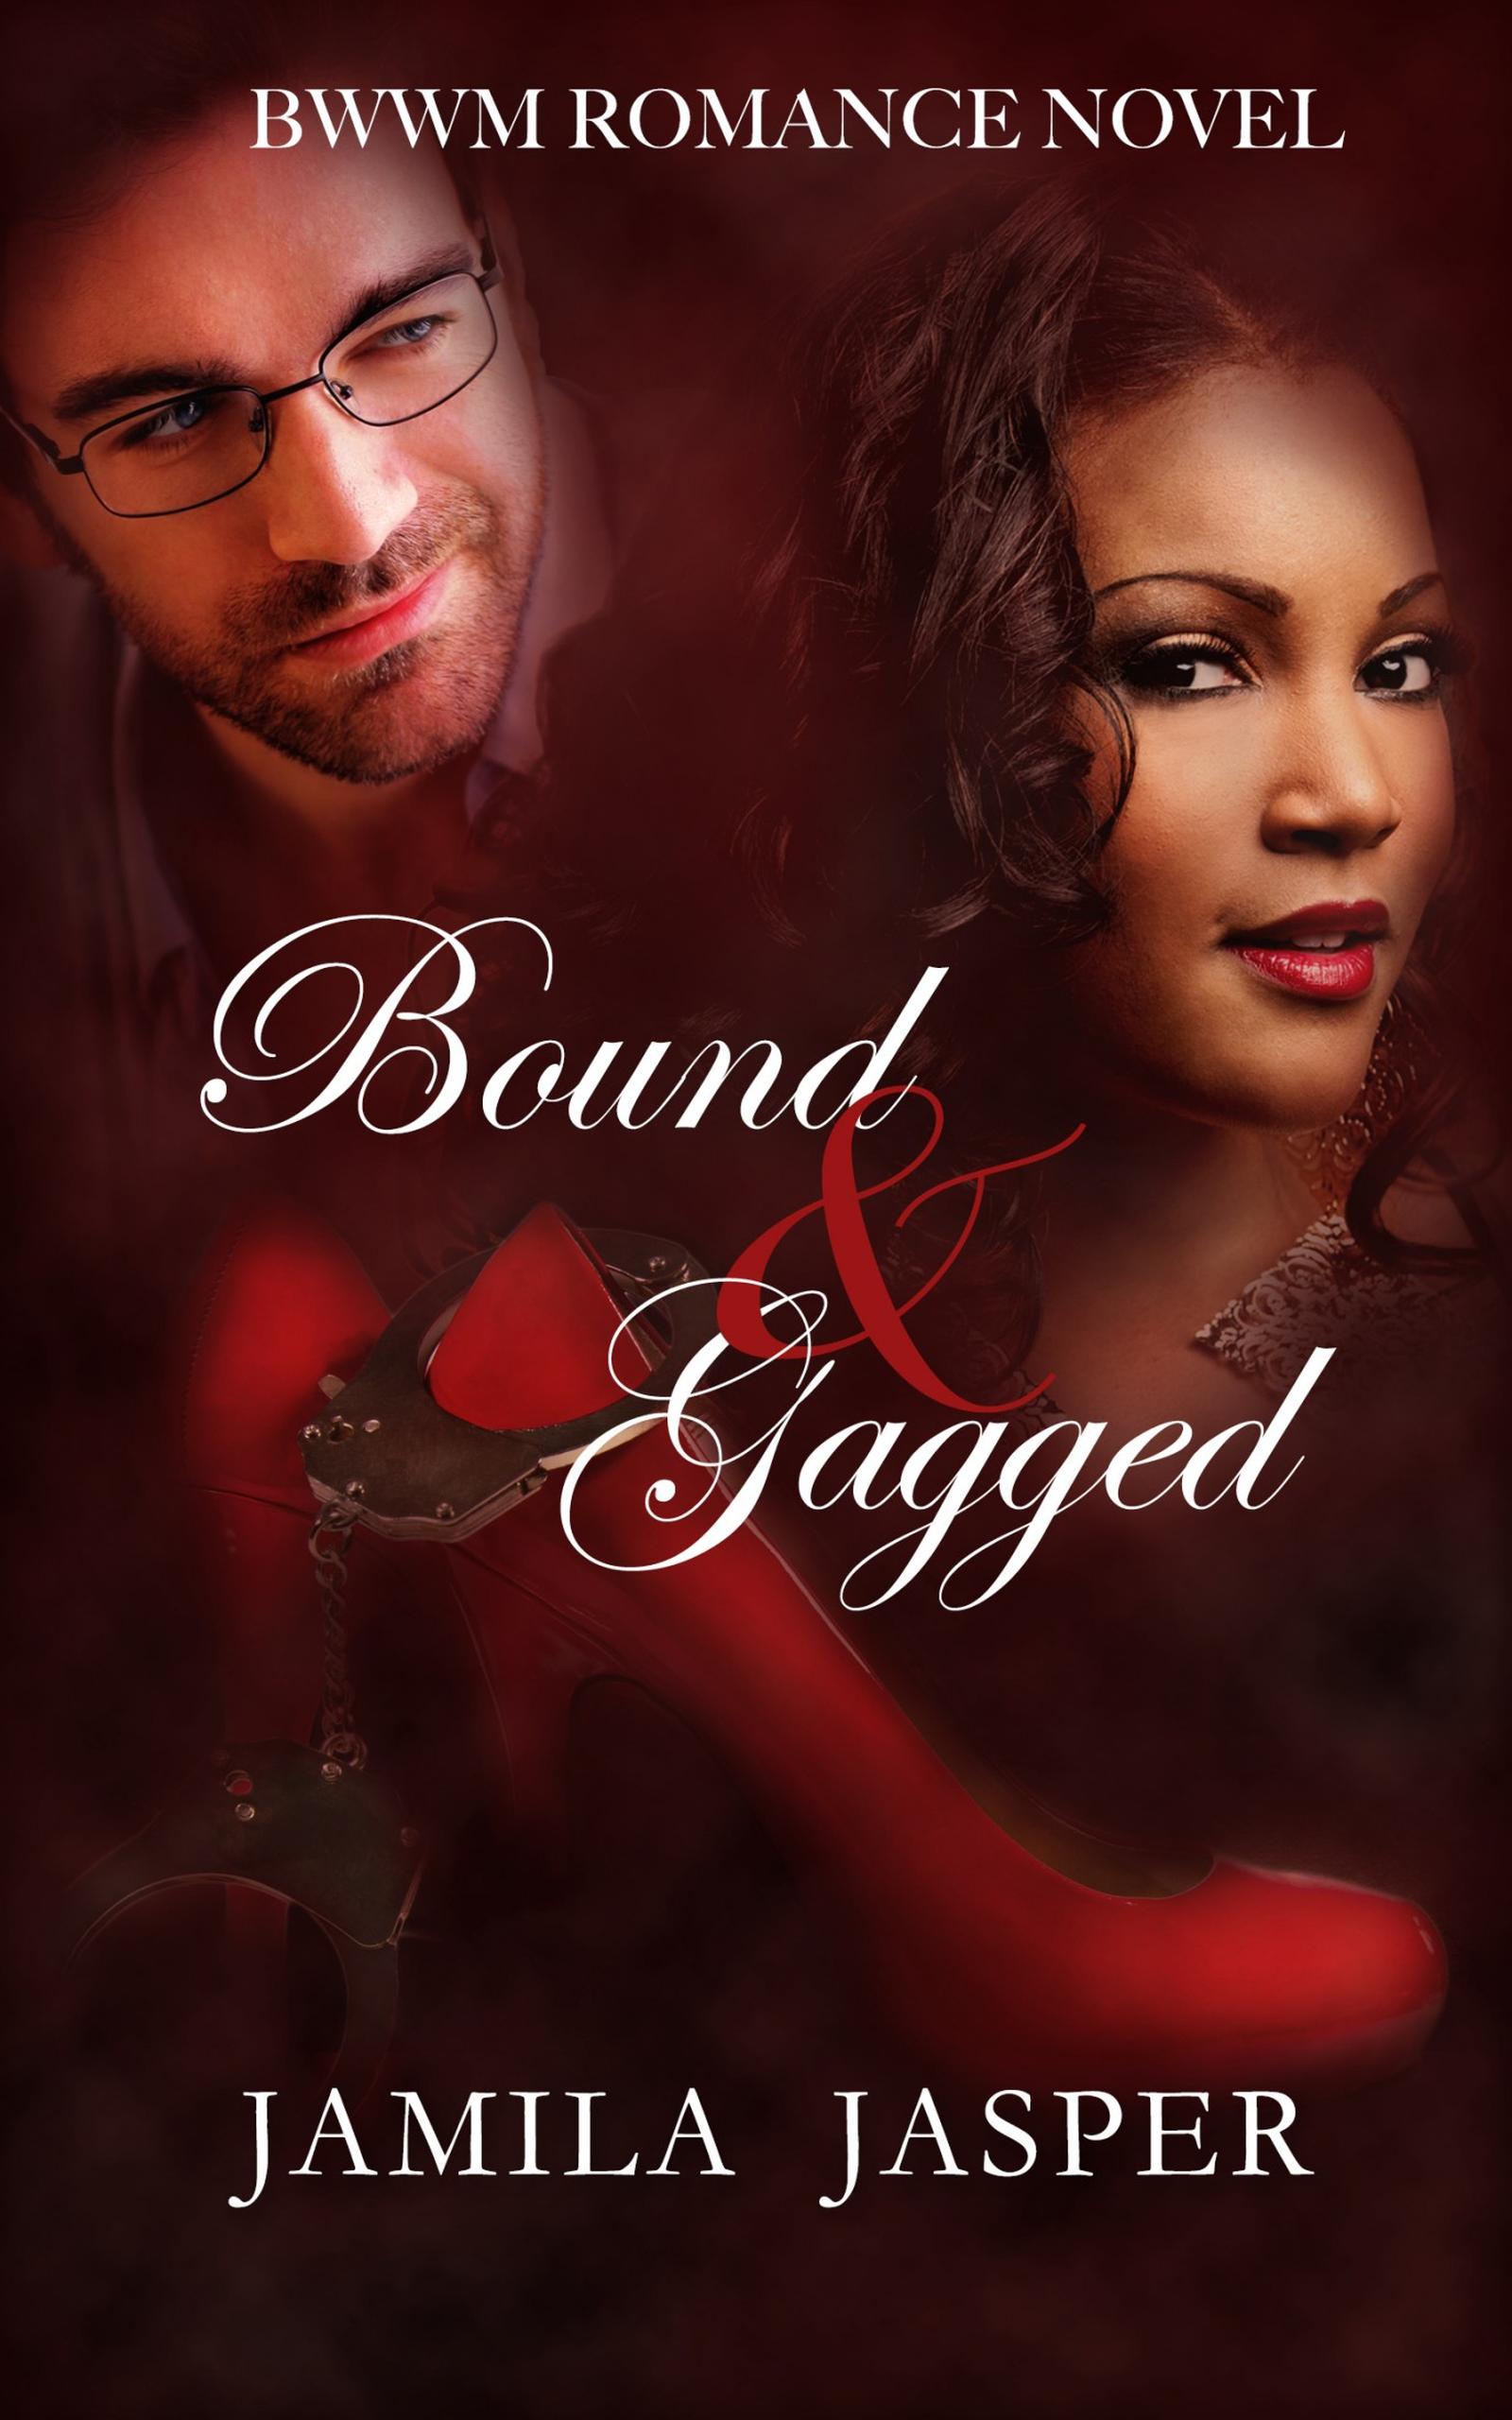 Smashwords Bound And Gagged Bwwm Romance Novel A Book By Jamila Jasper 